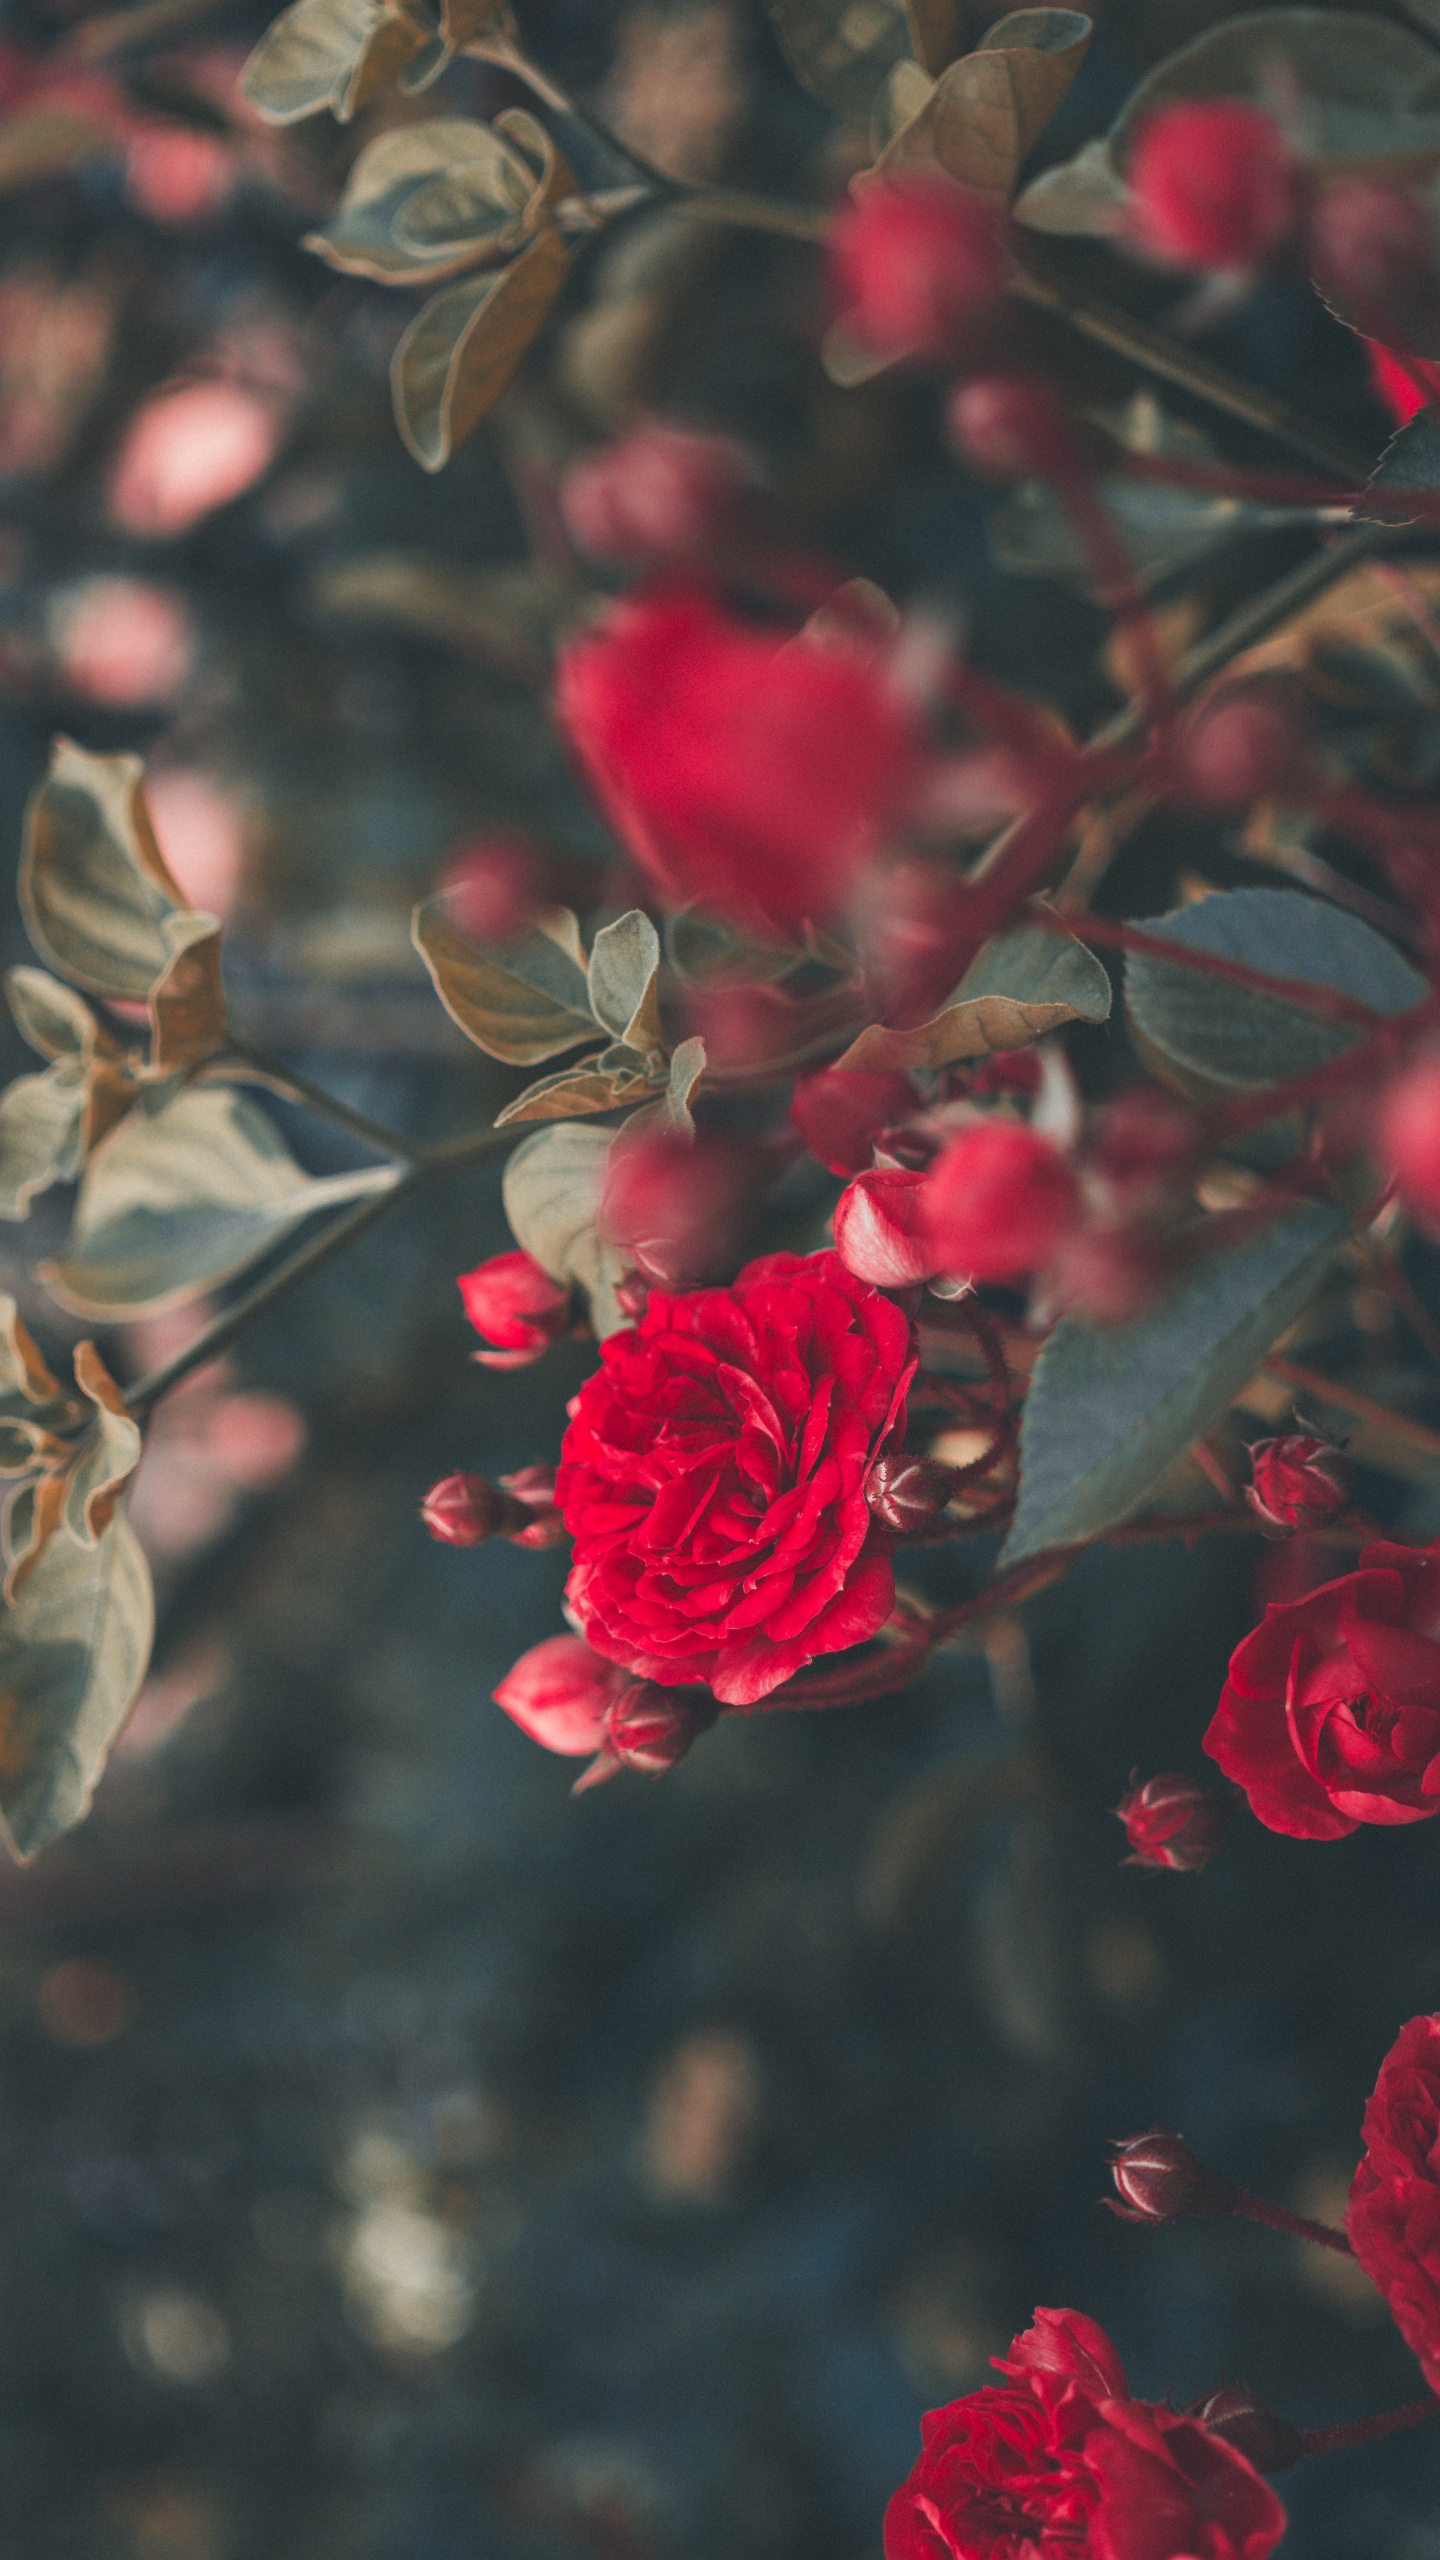 Rose Rouge en Fleurs Pendant la Journée. Wallpaper in 1440x2560 Resolution